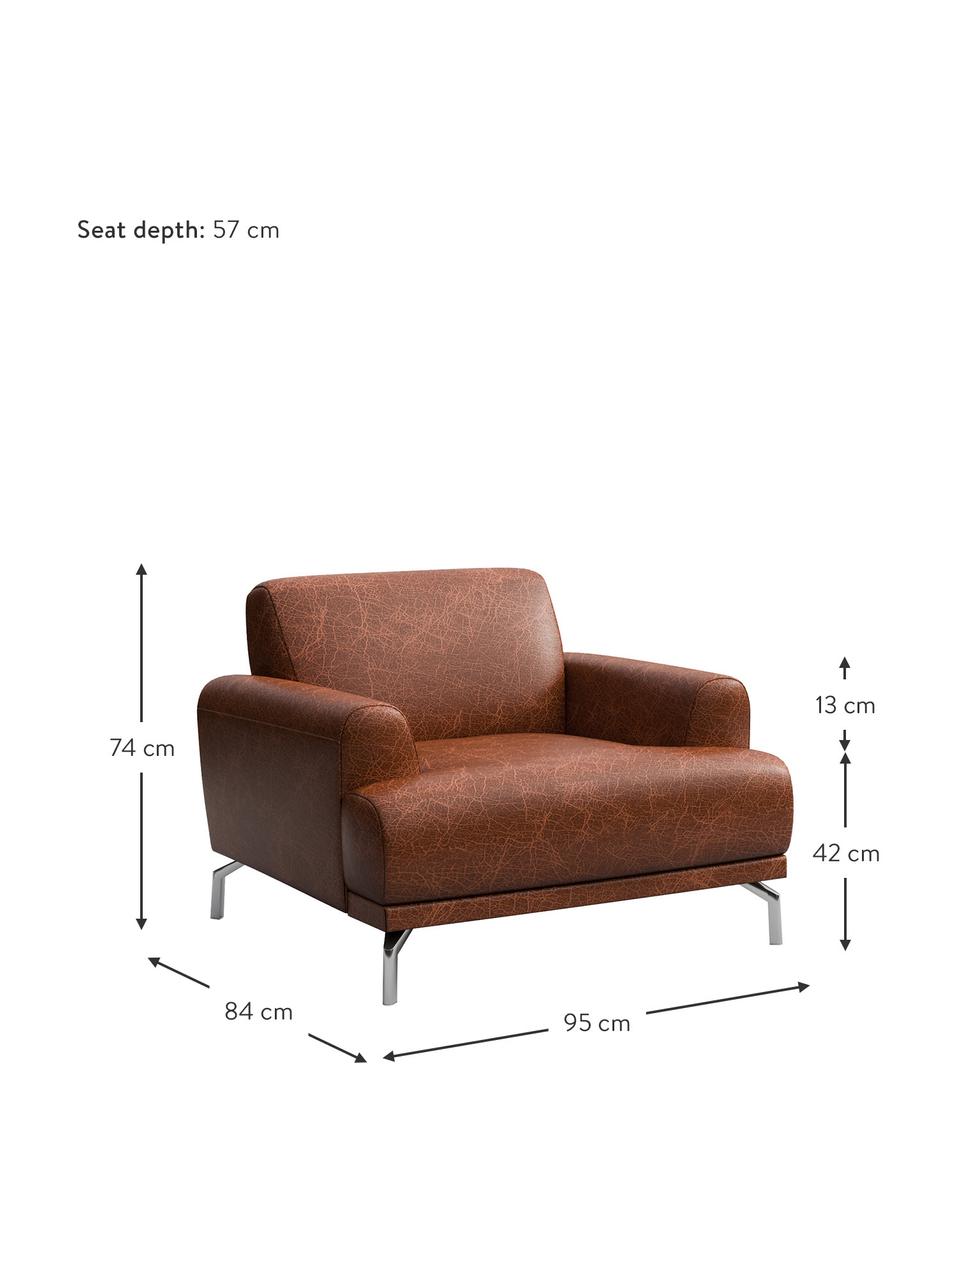 Fotel ze skóry Puzo, Tapicerka: 100% skóra, Nogi: metal, Koniakowy, S 95 x G 84 cm